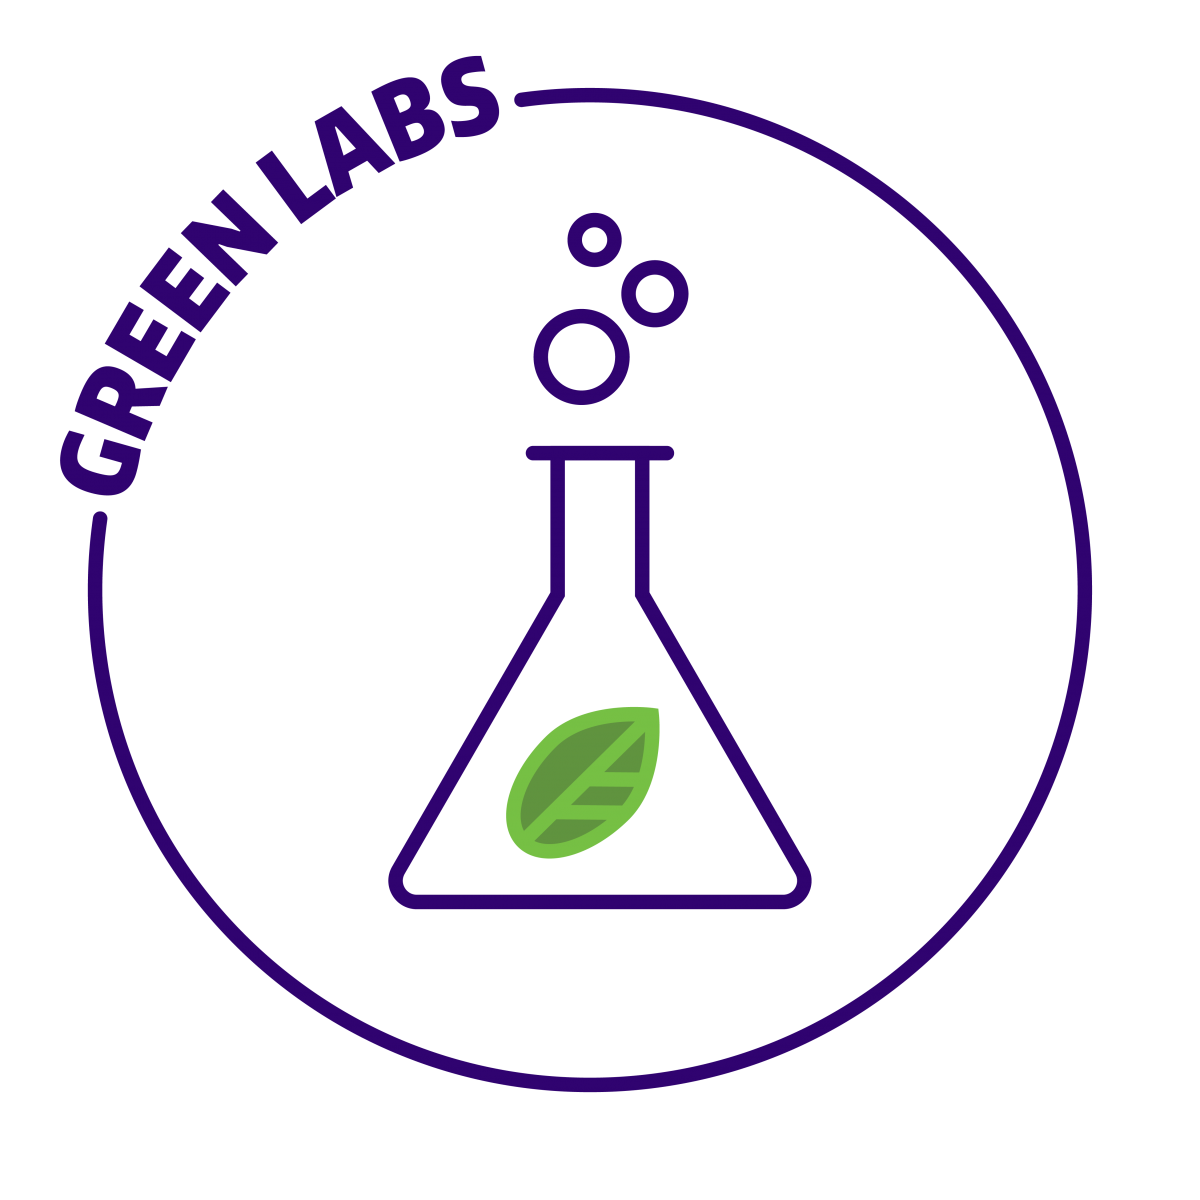 Green Laboratory logo